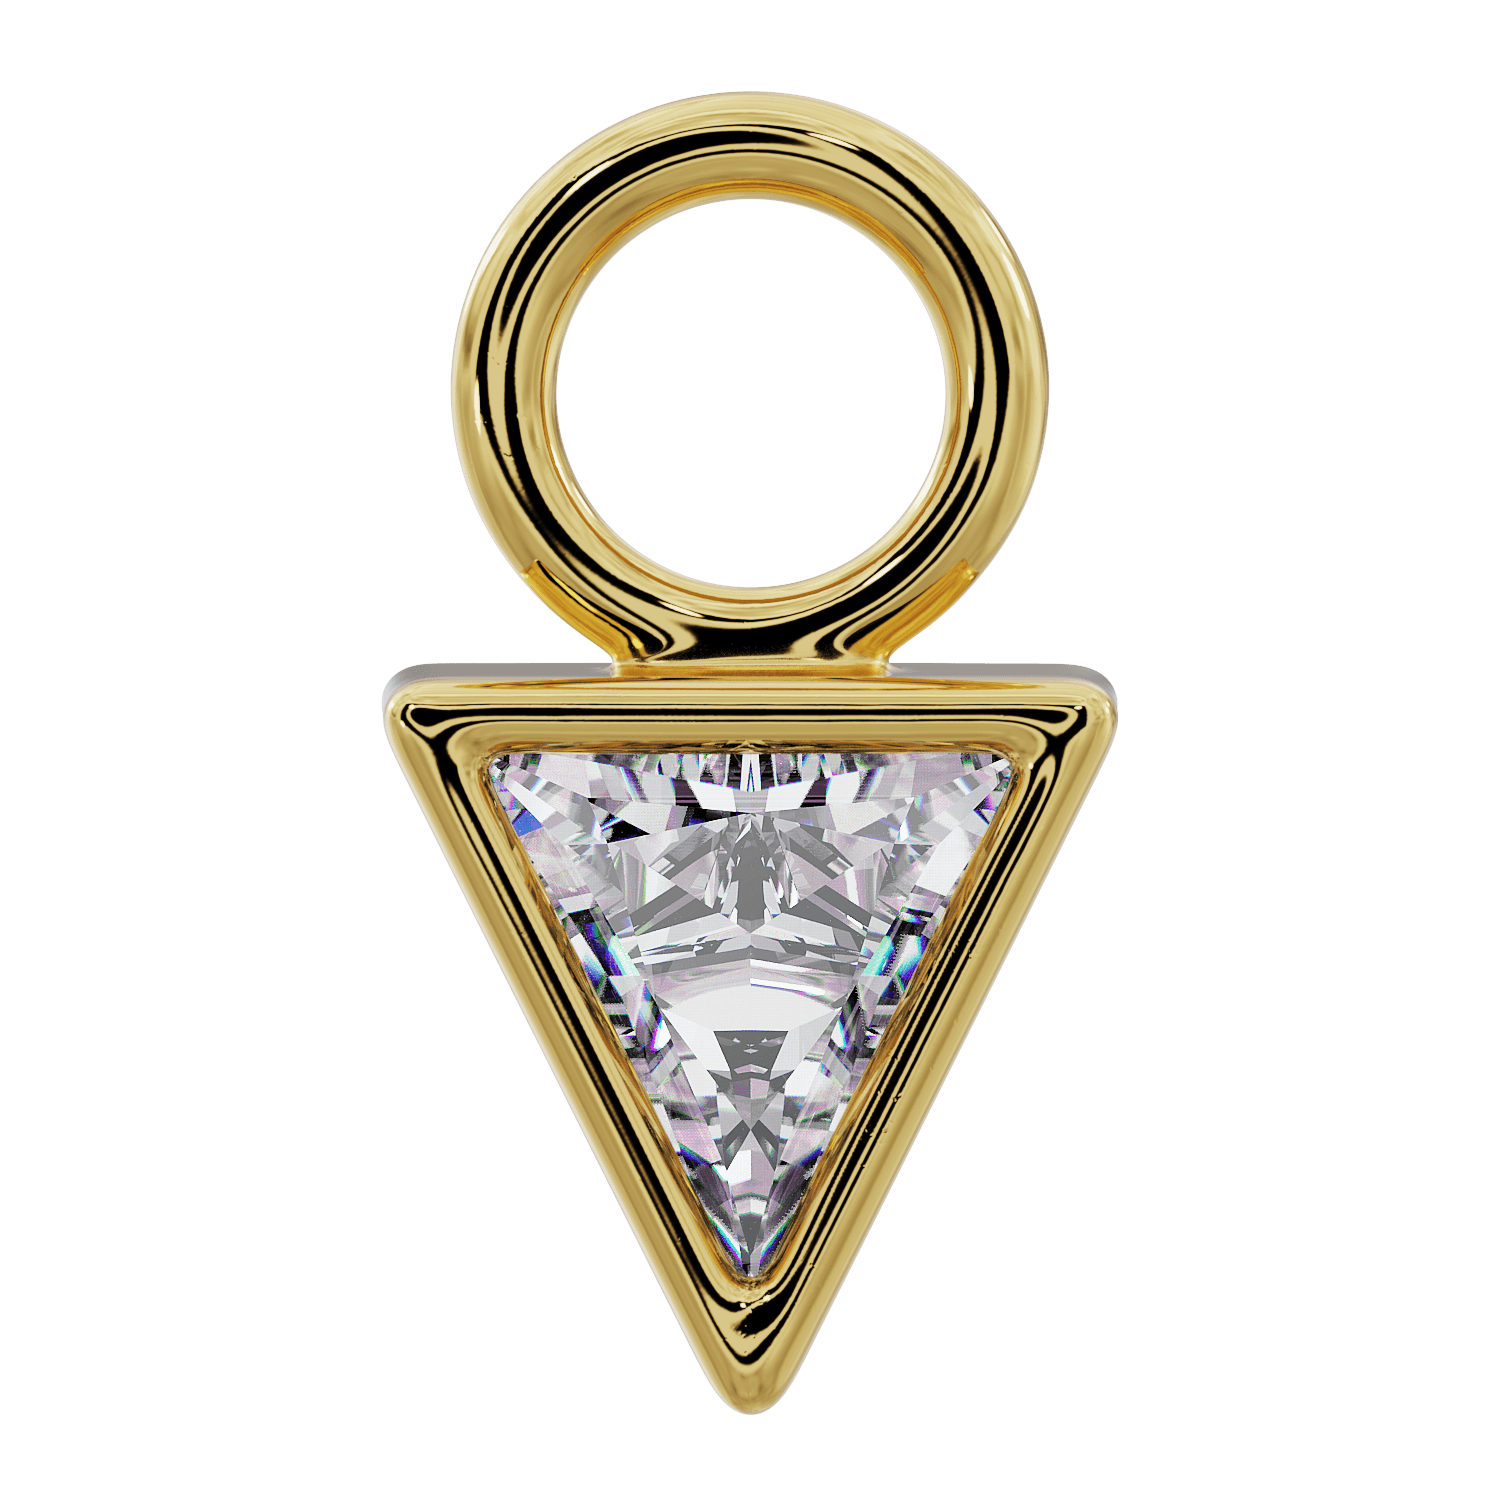 Triangle Diamond Charm Accessory for Piercing Jewelry-14K Yellow Gold